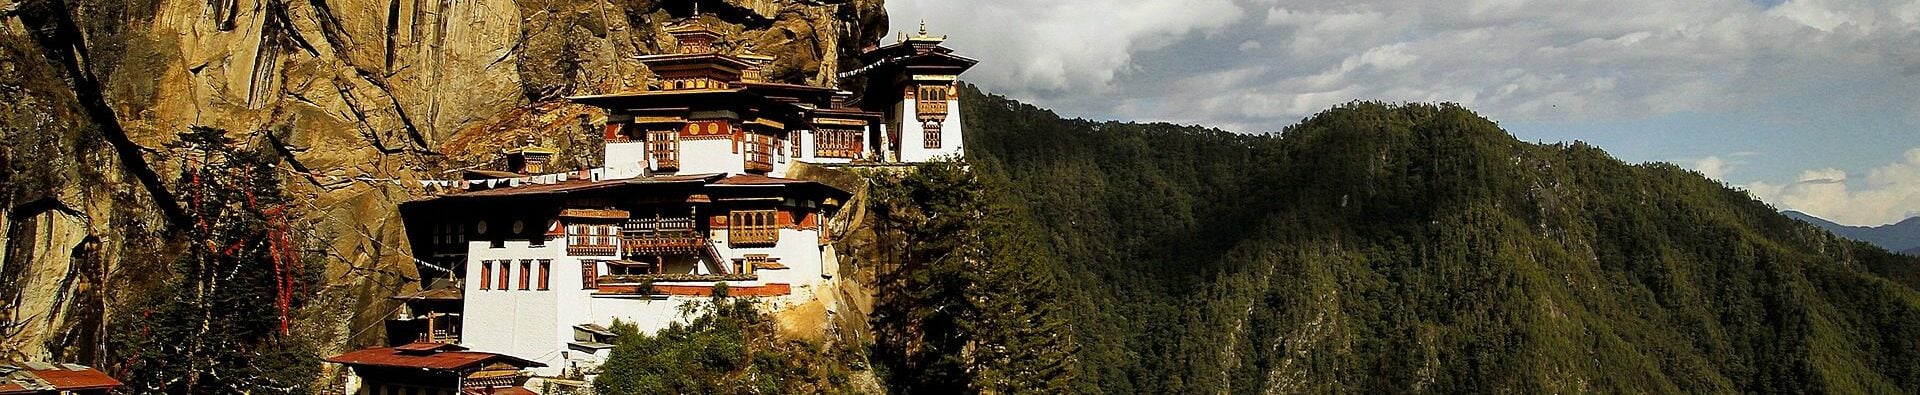 Bhutan hiking and trekking vacations, guided walking tours in Bhutan, Bhutanese culture, dzong, monastery, hiking, walking, mountain, asia, history, culture